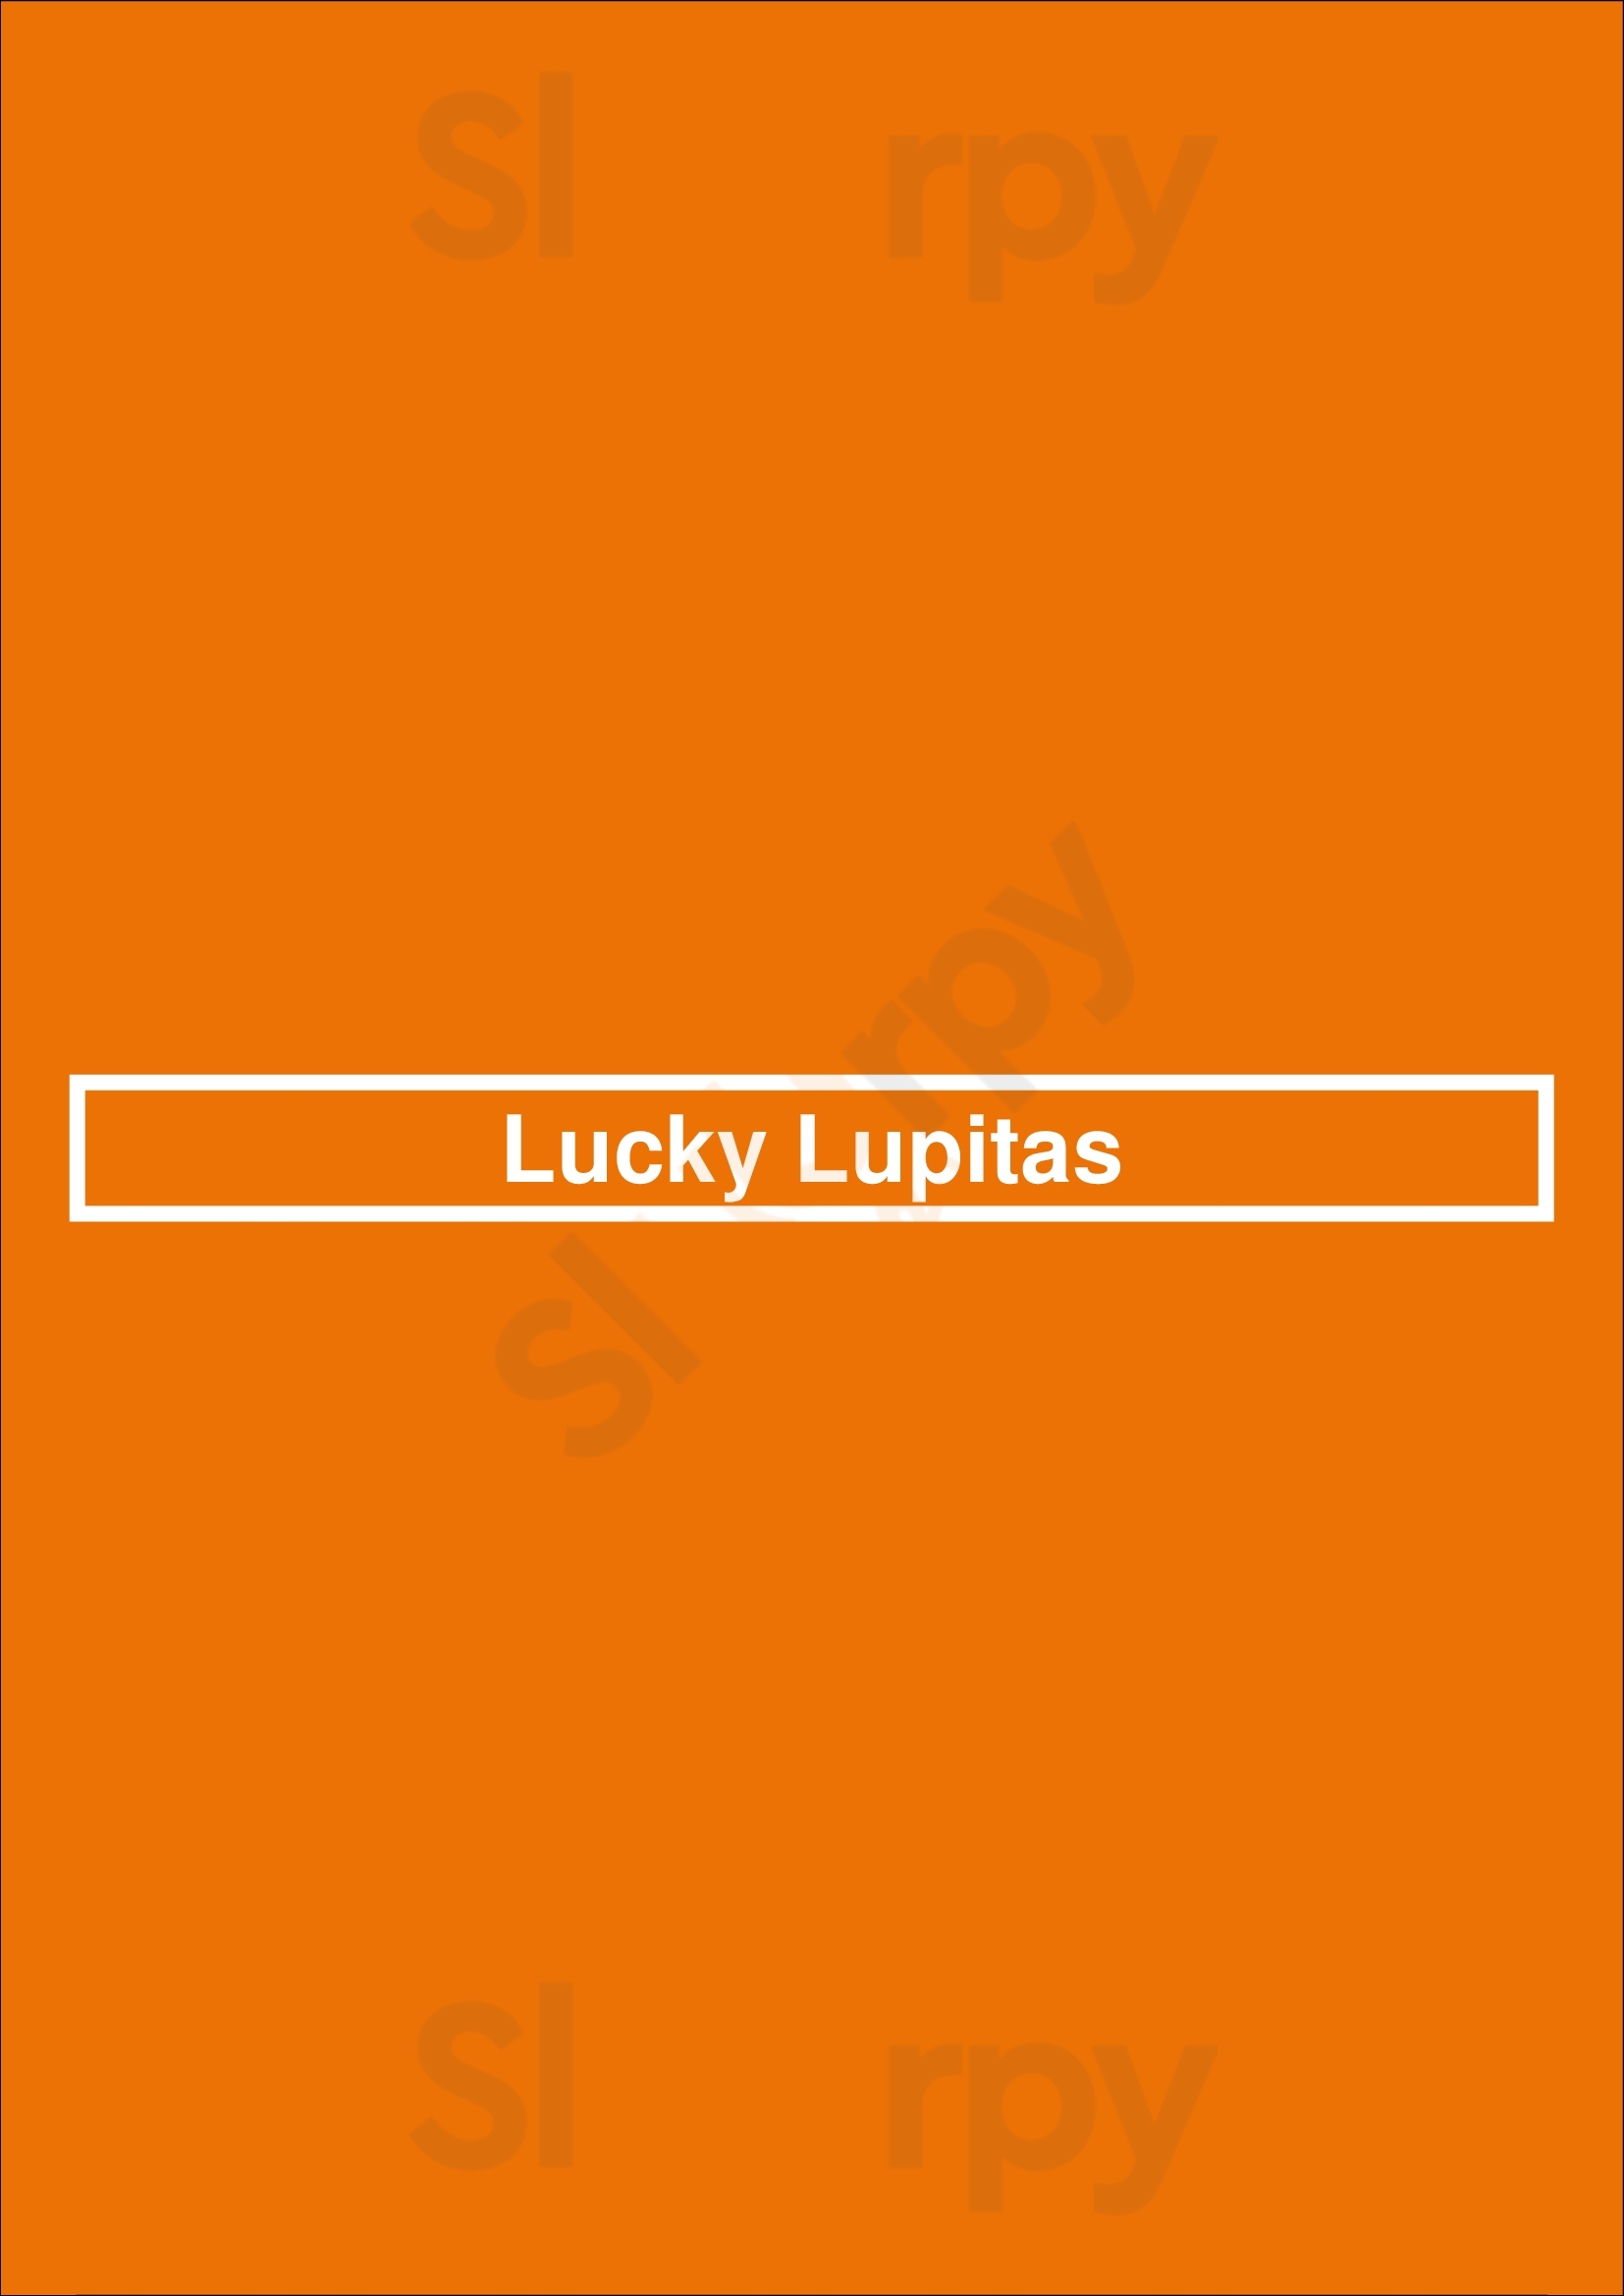 Lucky Lupitas Adelaide Menu - 1